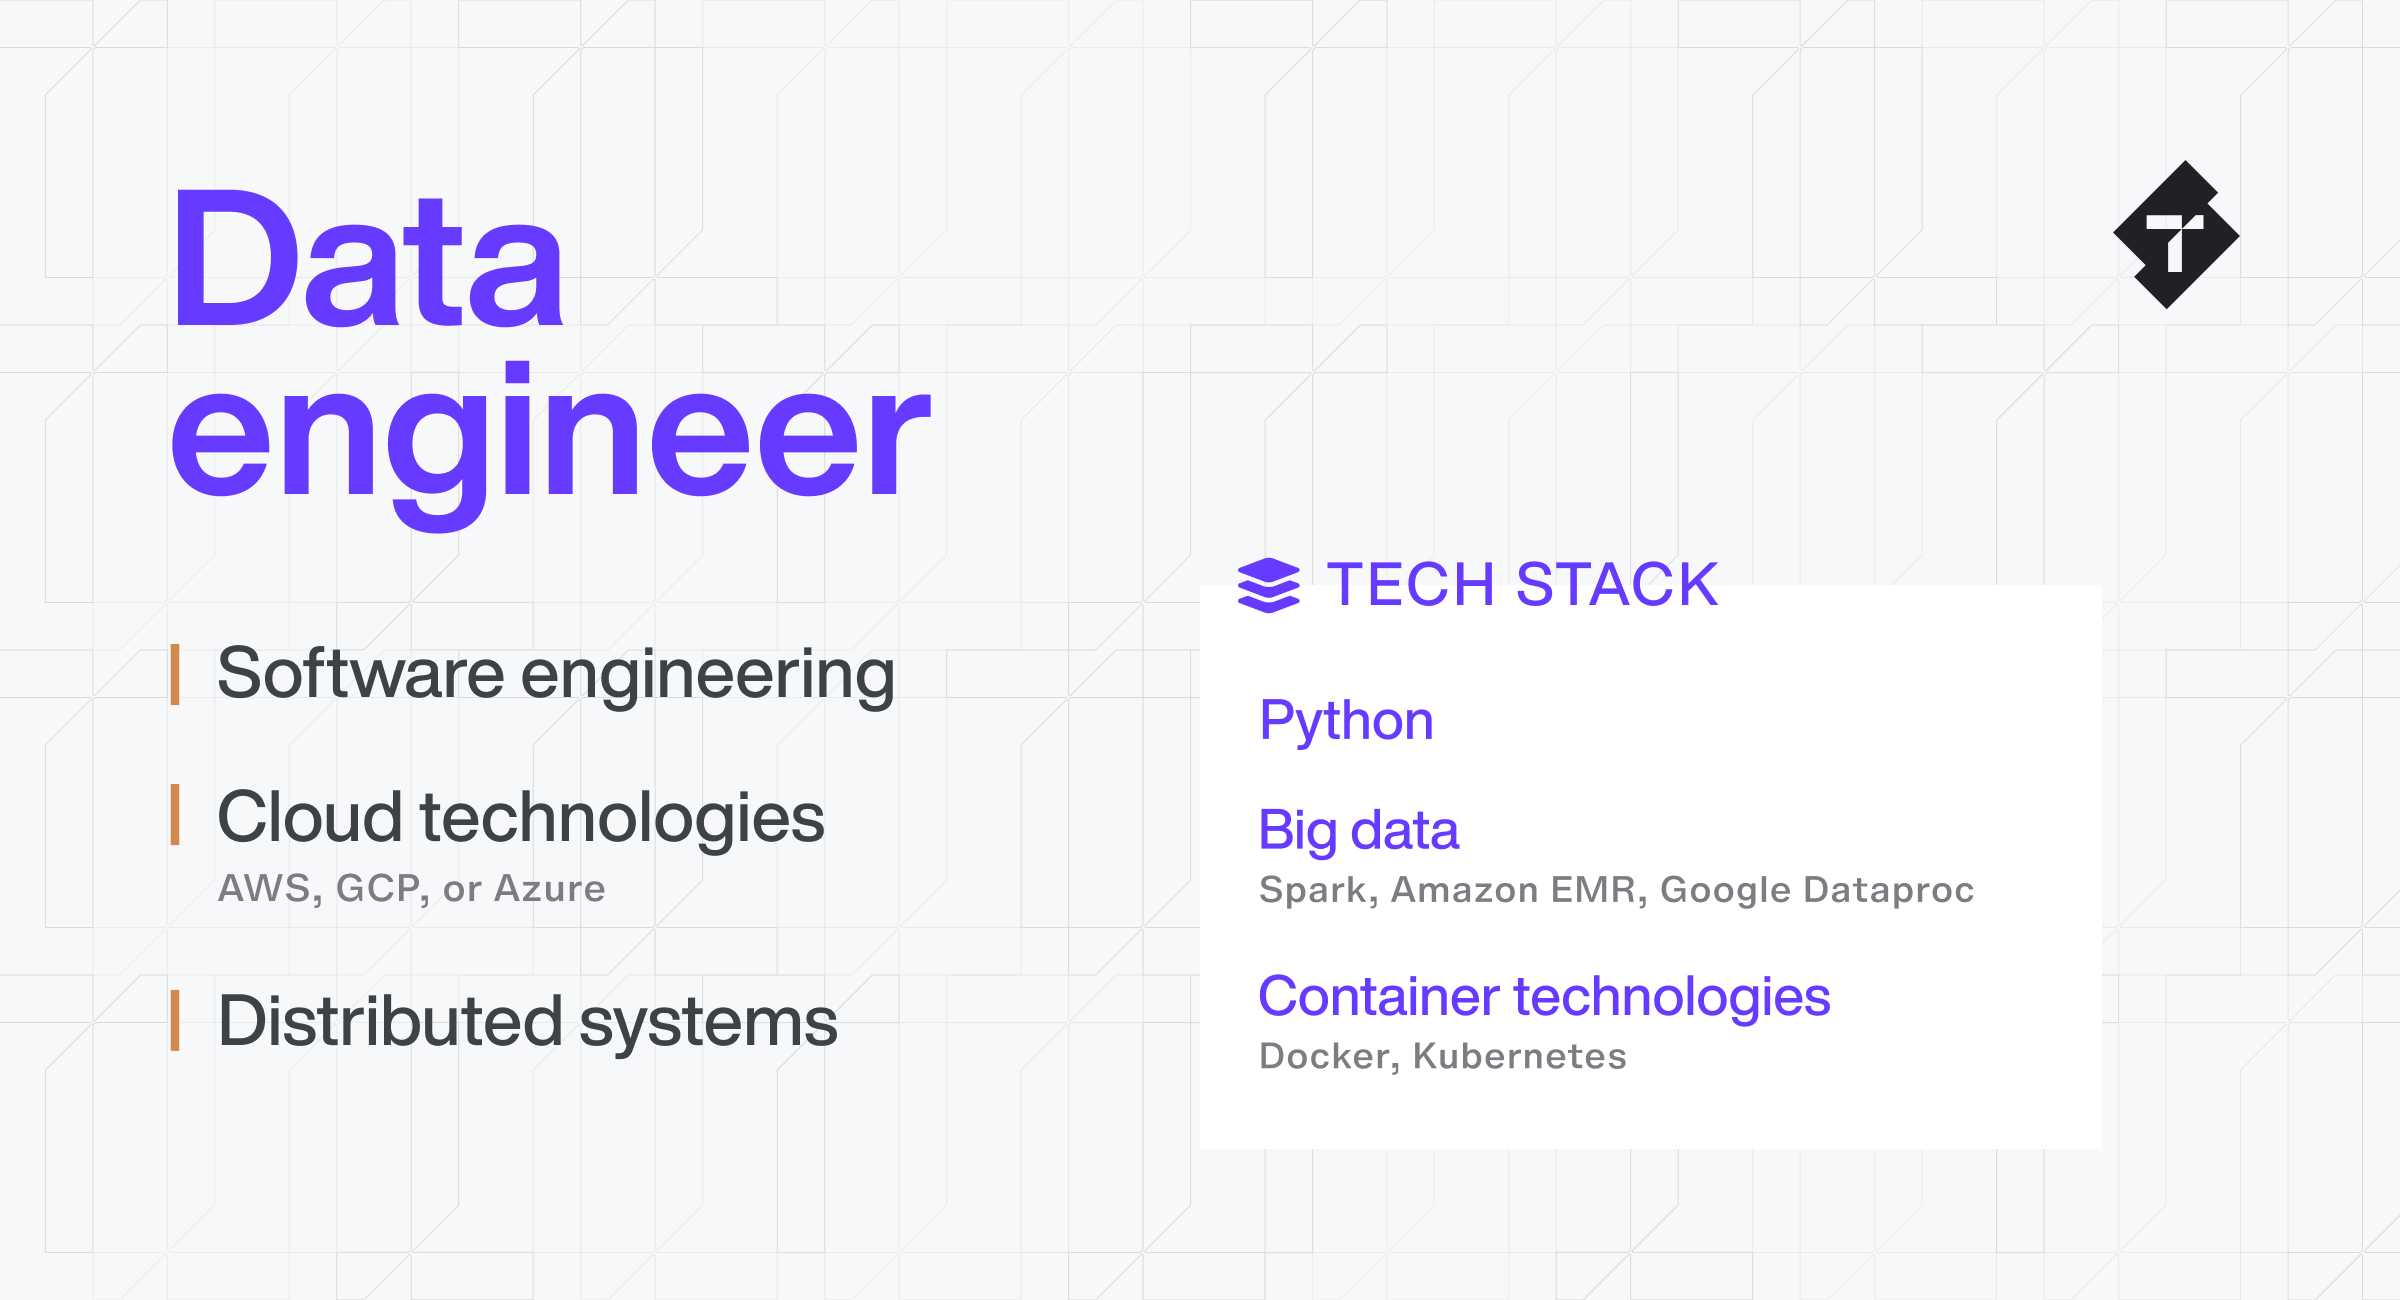 Data engineer skills and tech stack